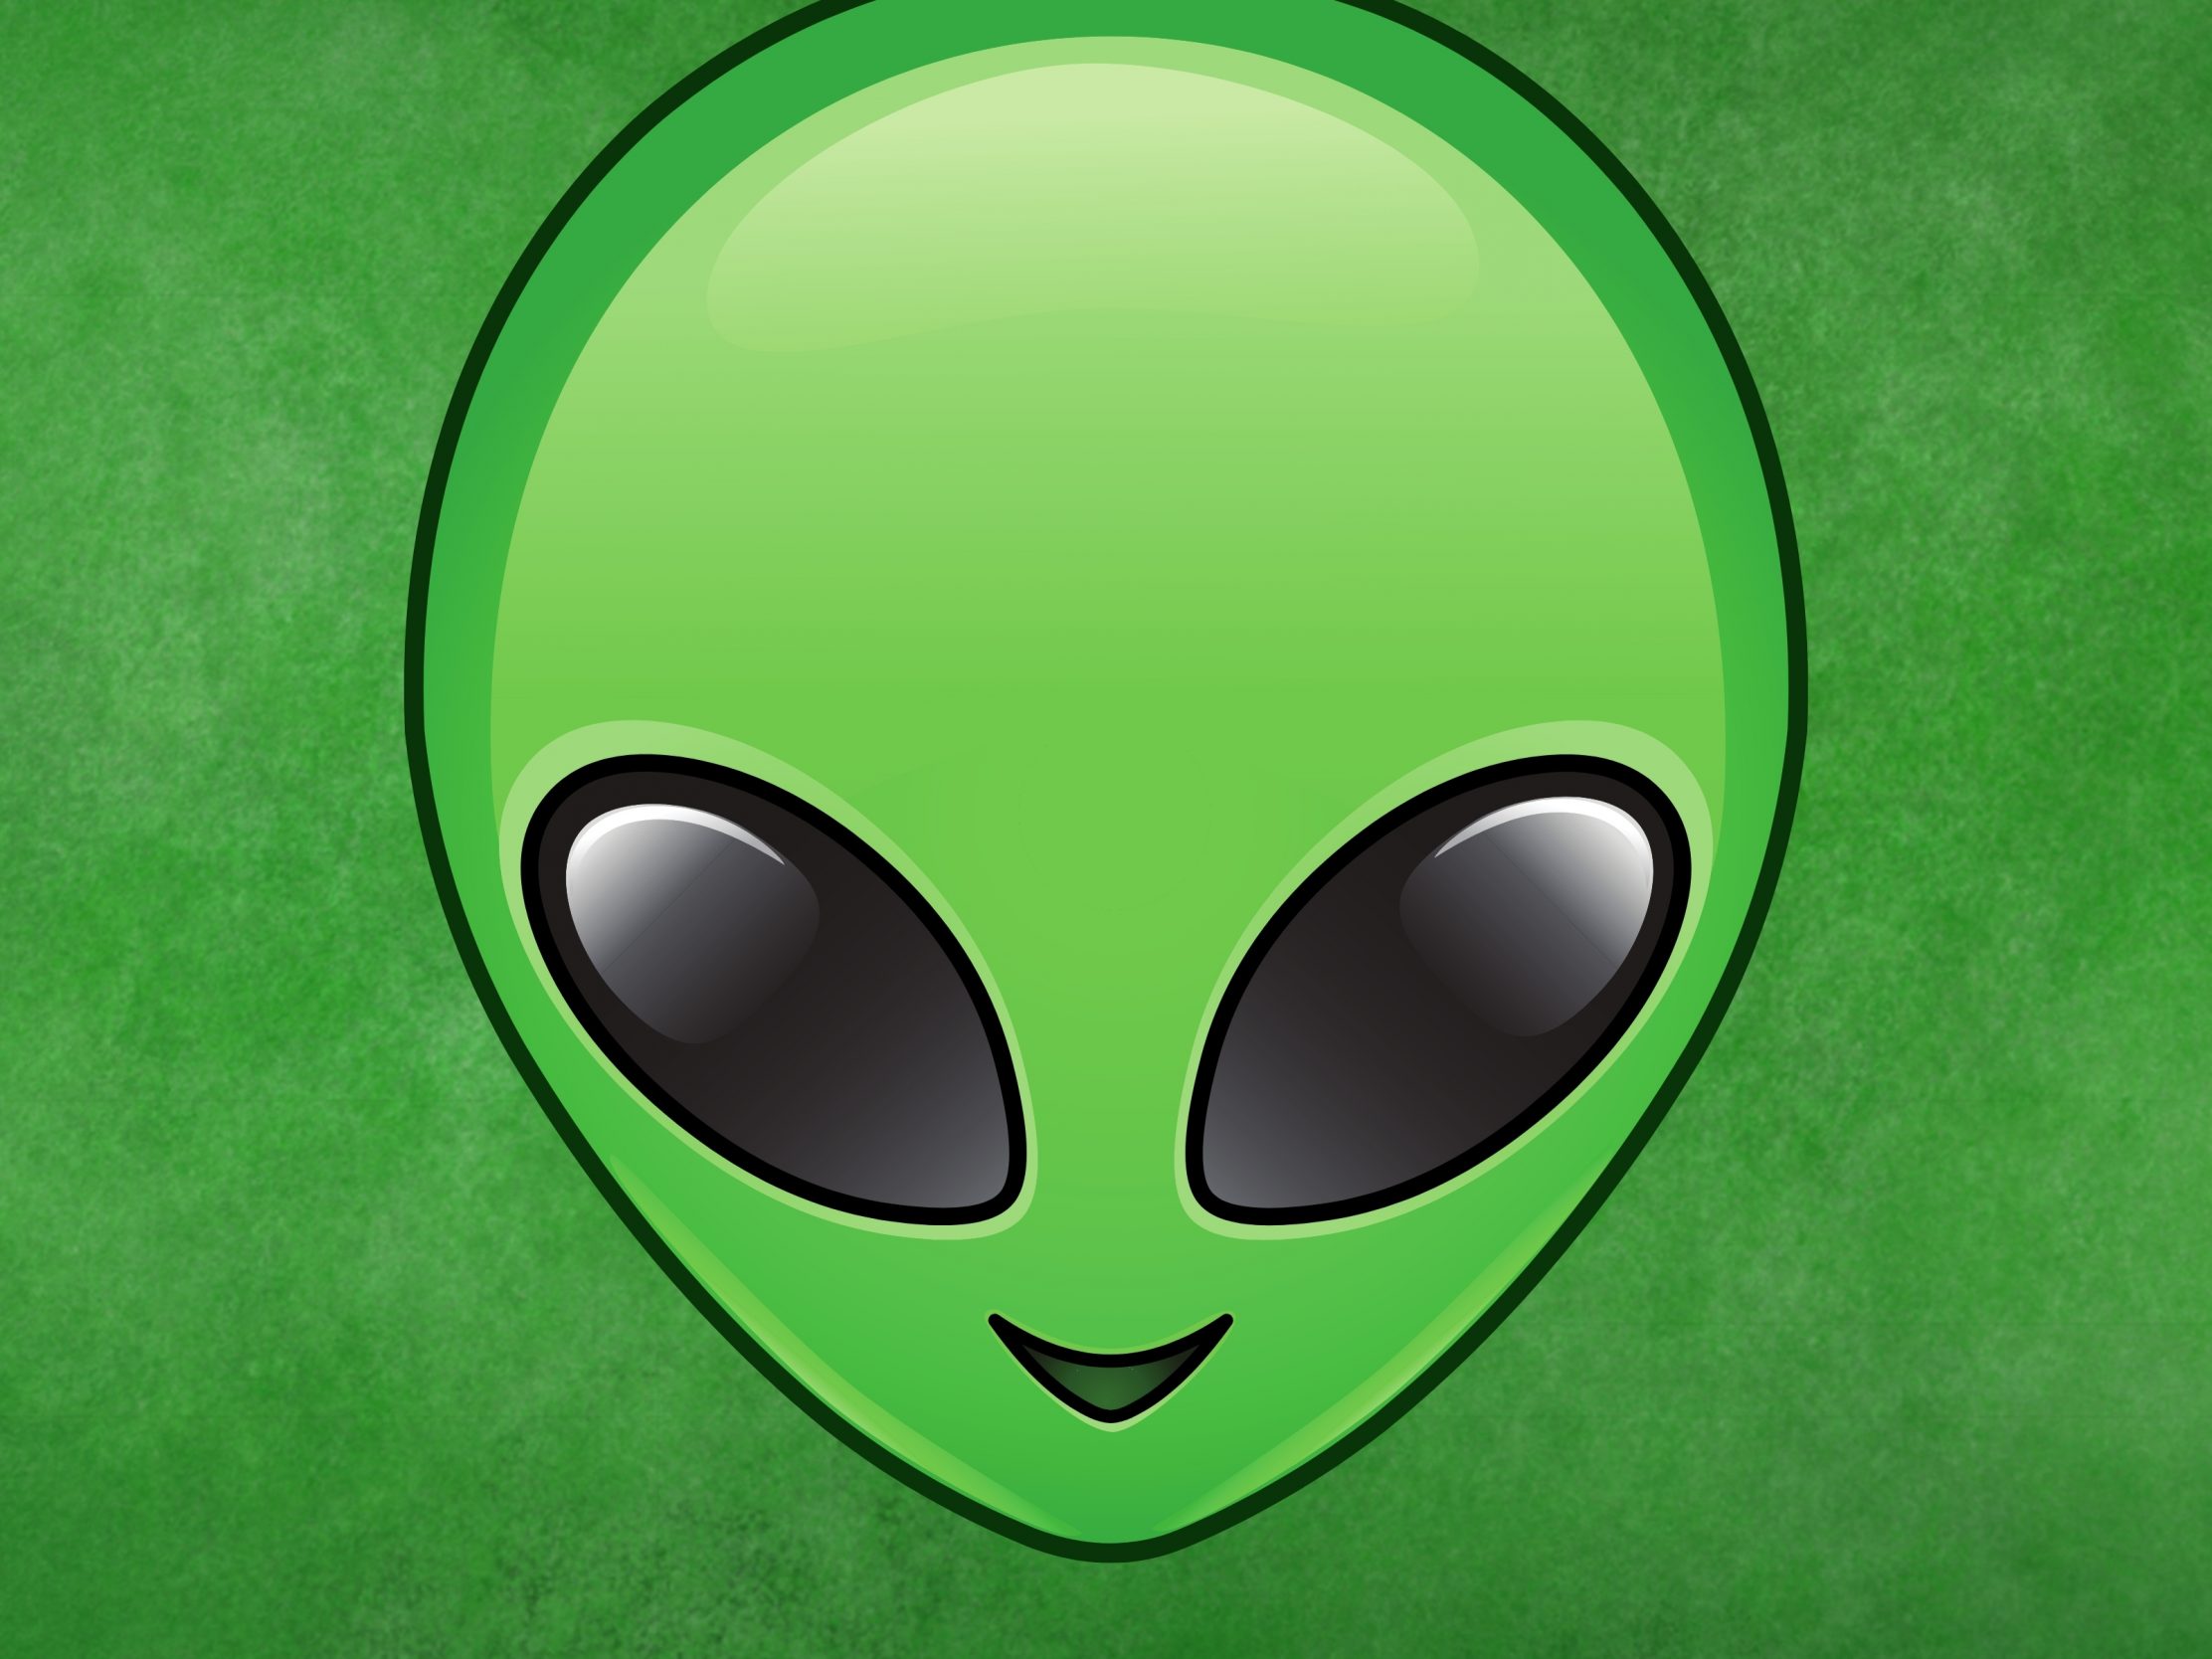 2224x1668 iPad Pro wallpapers Alien Emoji Face Invader Halloween Spaceship Green iPad Wallpaper 2224x1668 pixels resolution